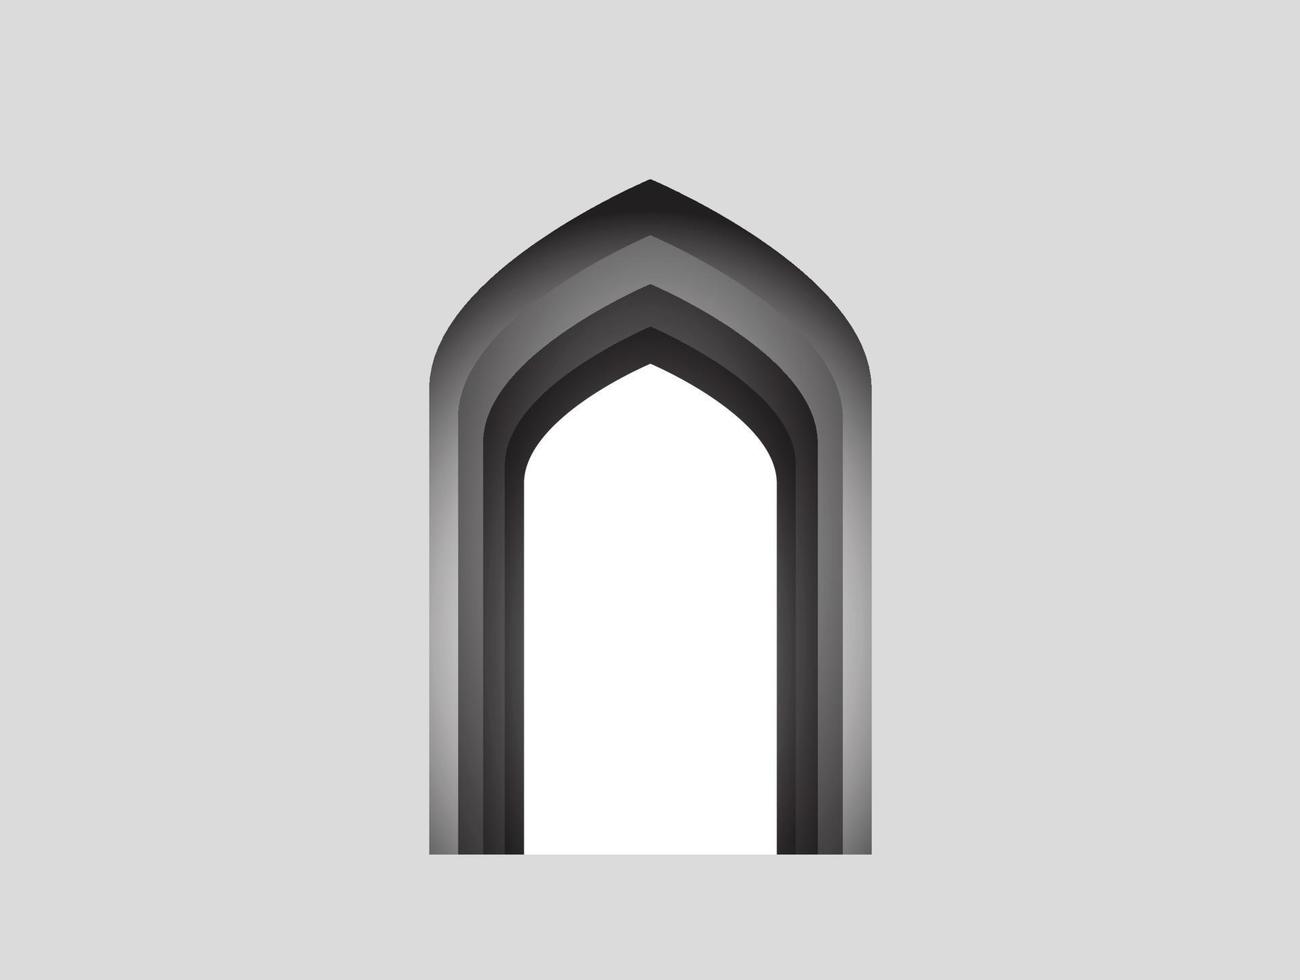 Arabic arch window and doors Vector